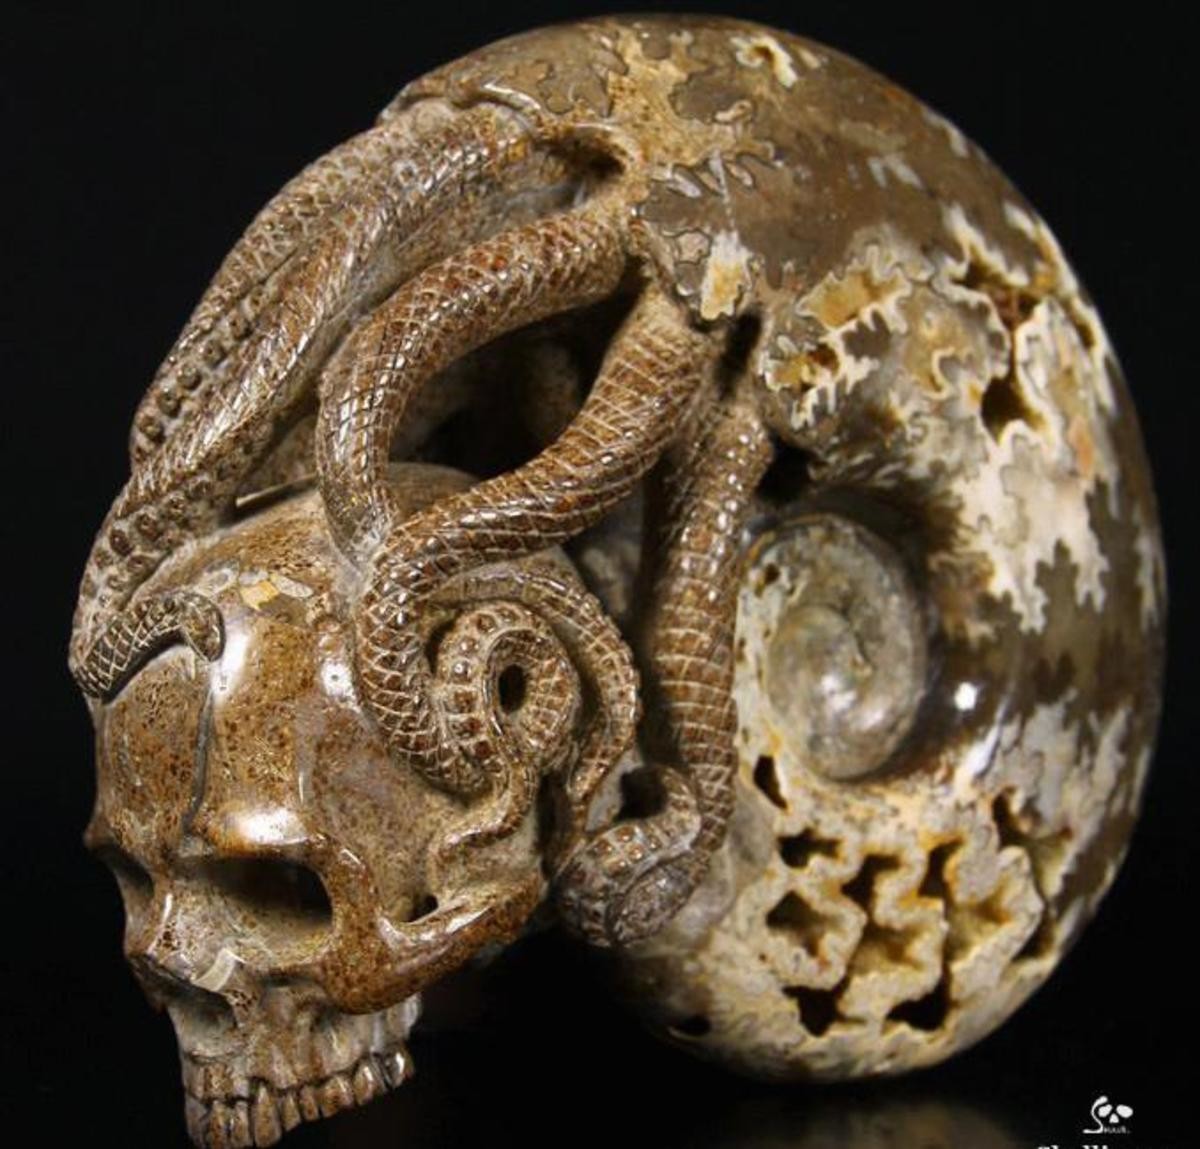 Hand-Carved Skulls Made from Ammonites Fossils. Artist is Skullis(no link I could find).